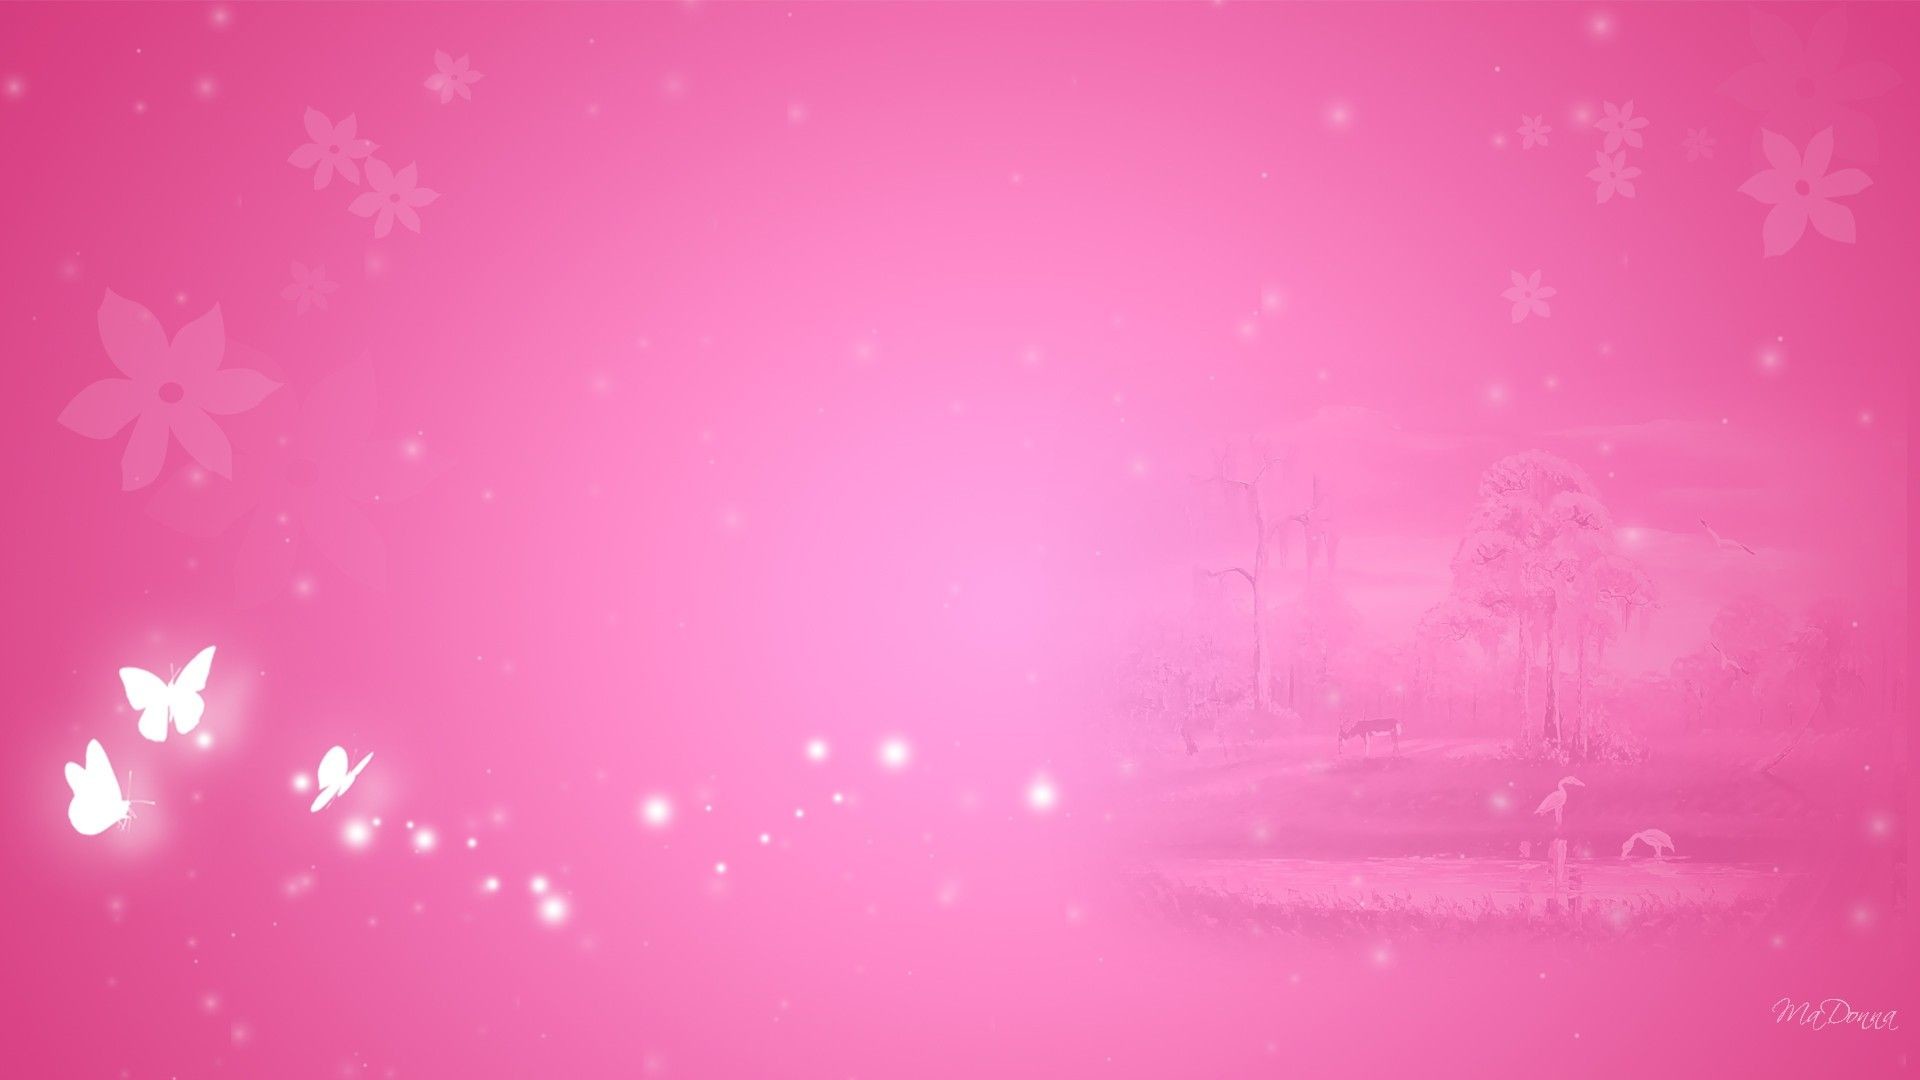 41+] Pink Pretty Backgrounds - WallpaperSafari